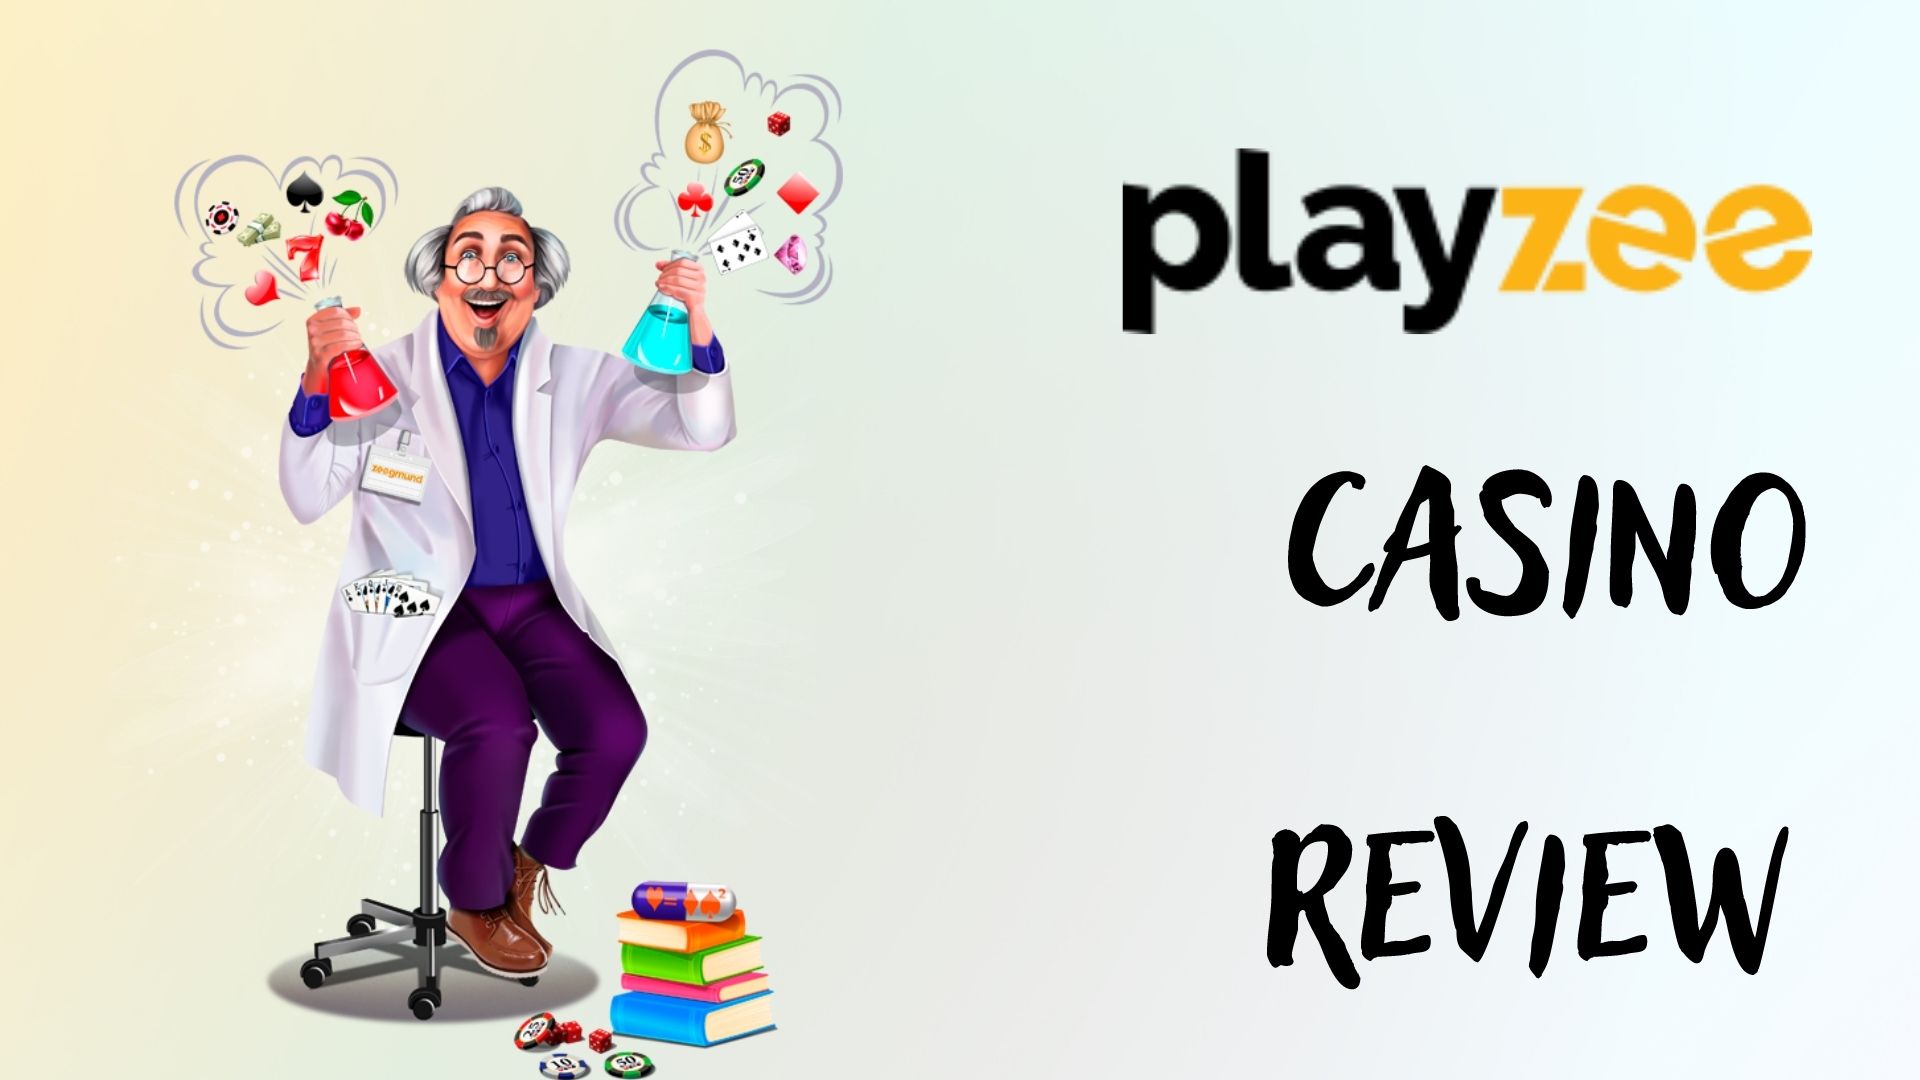 PlayZee Online Casino Review